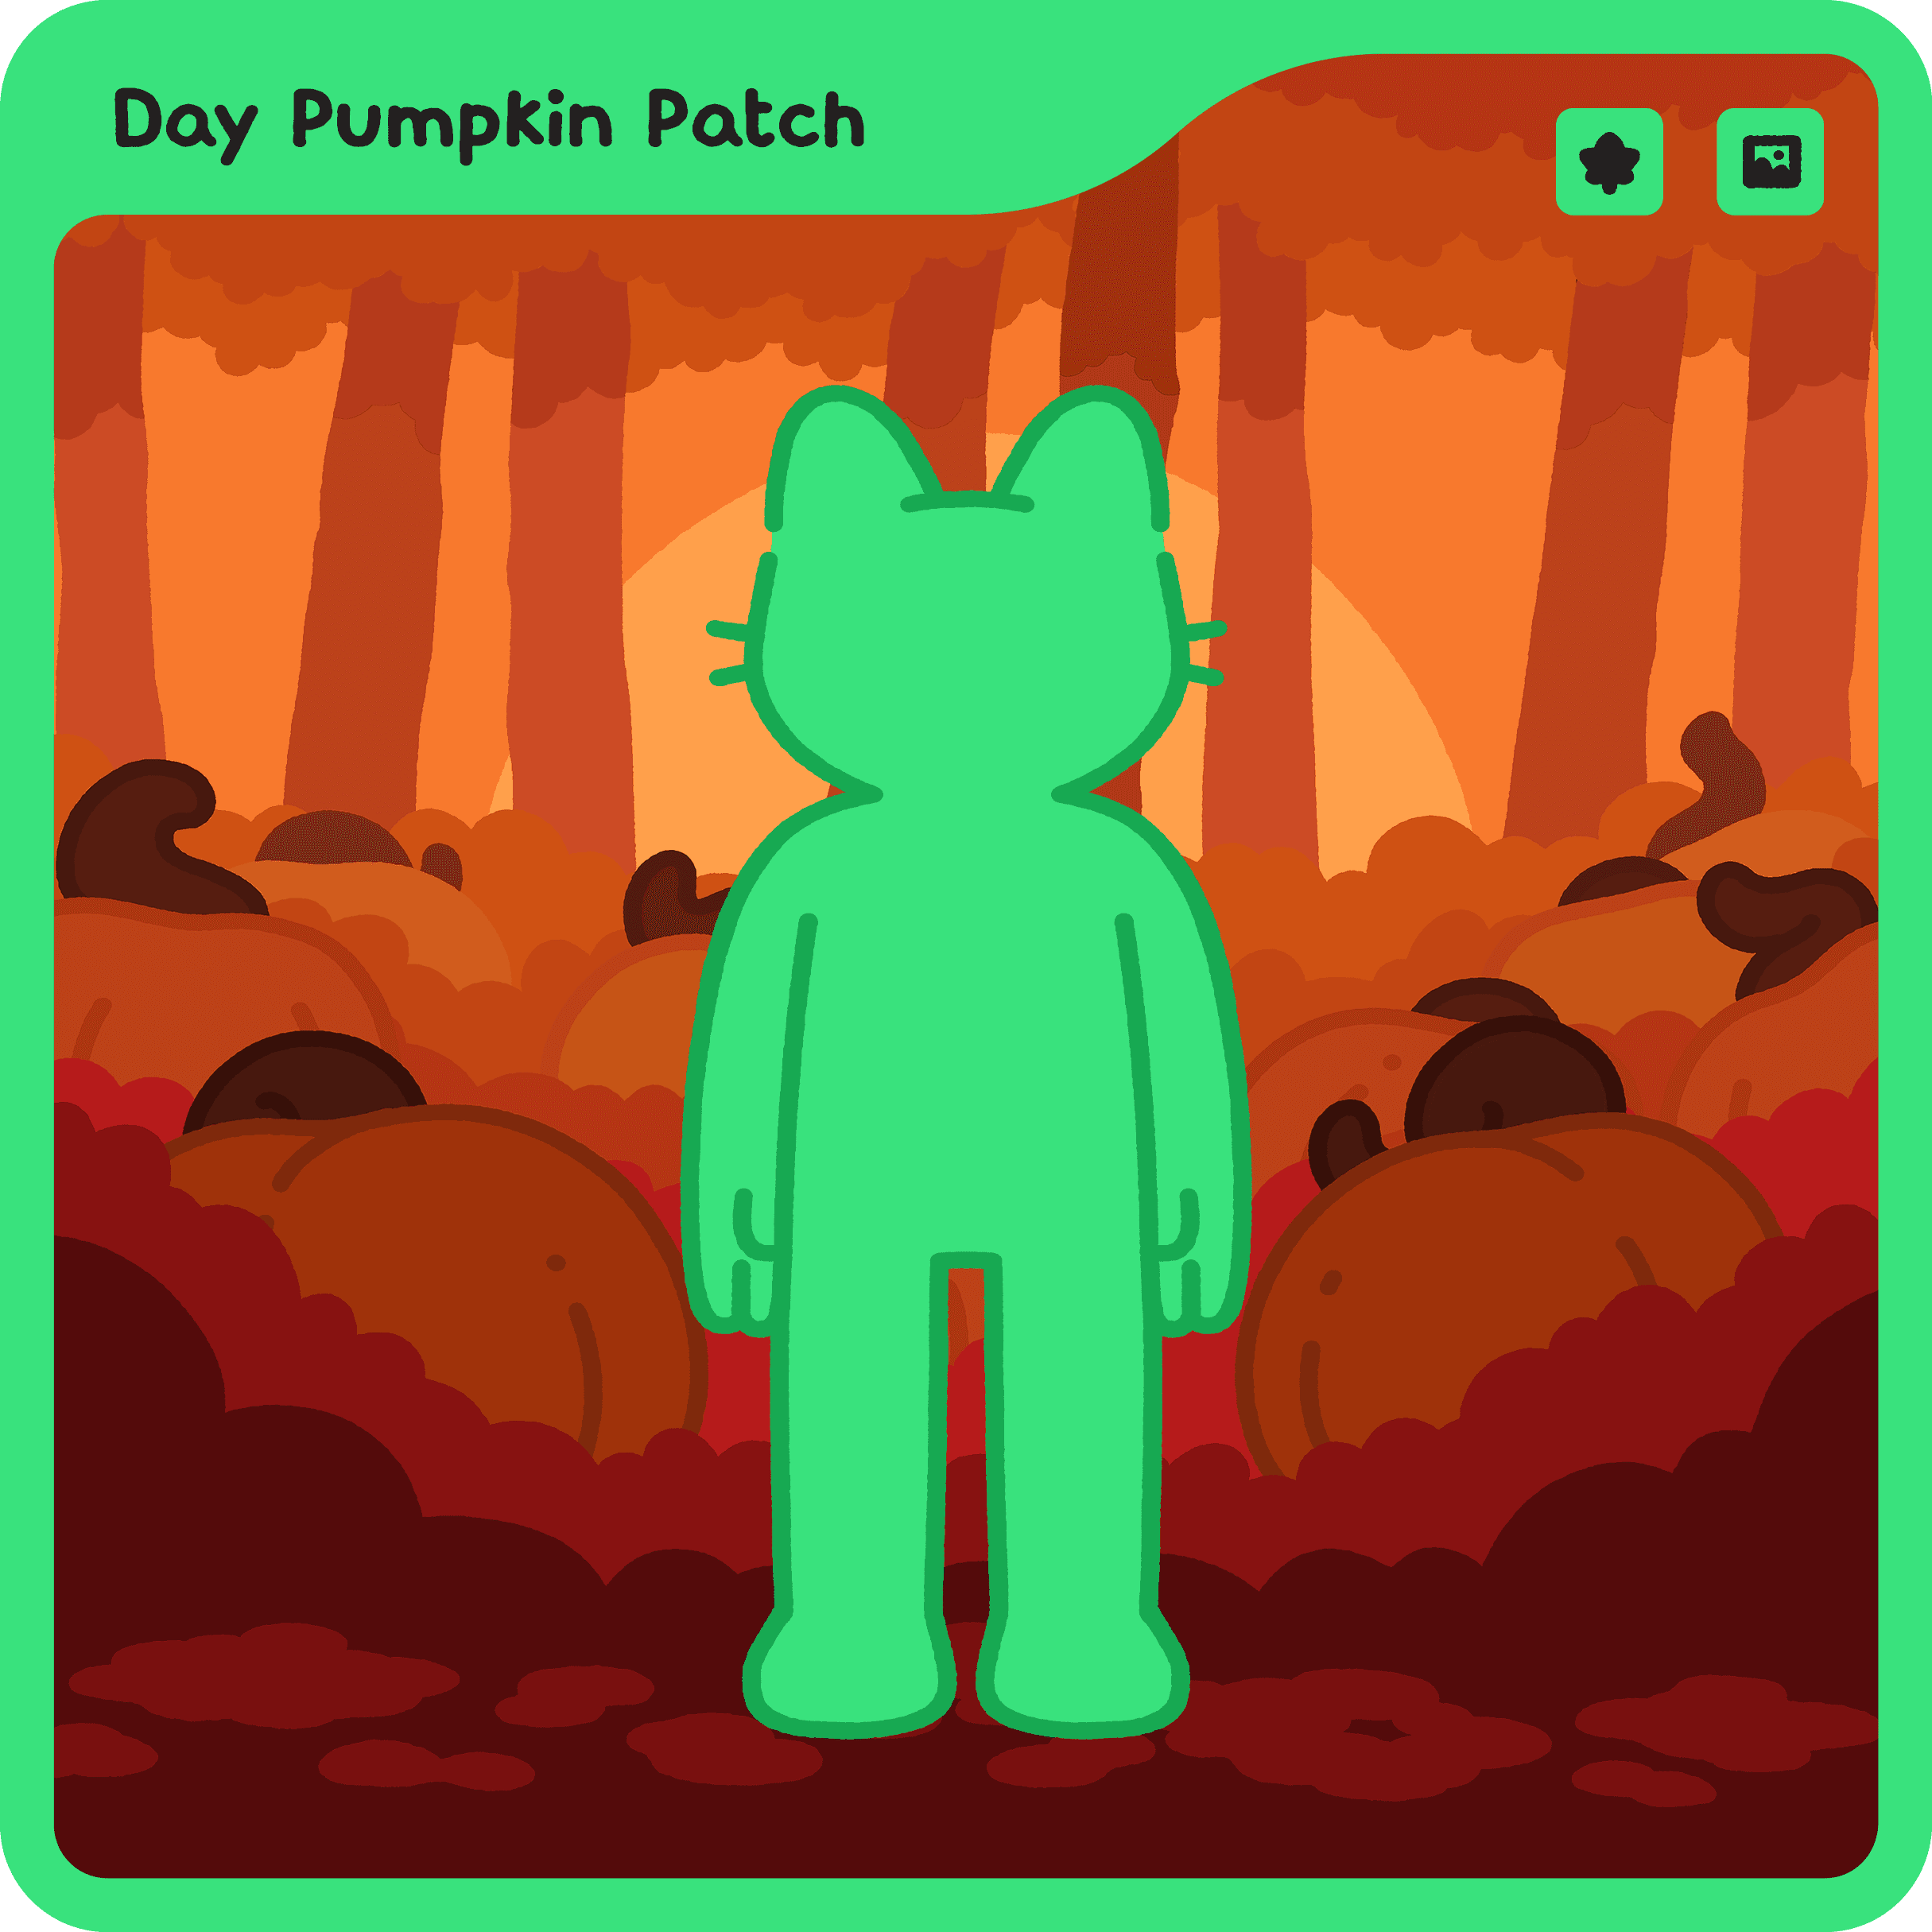 Day Pumpkin Patch